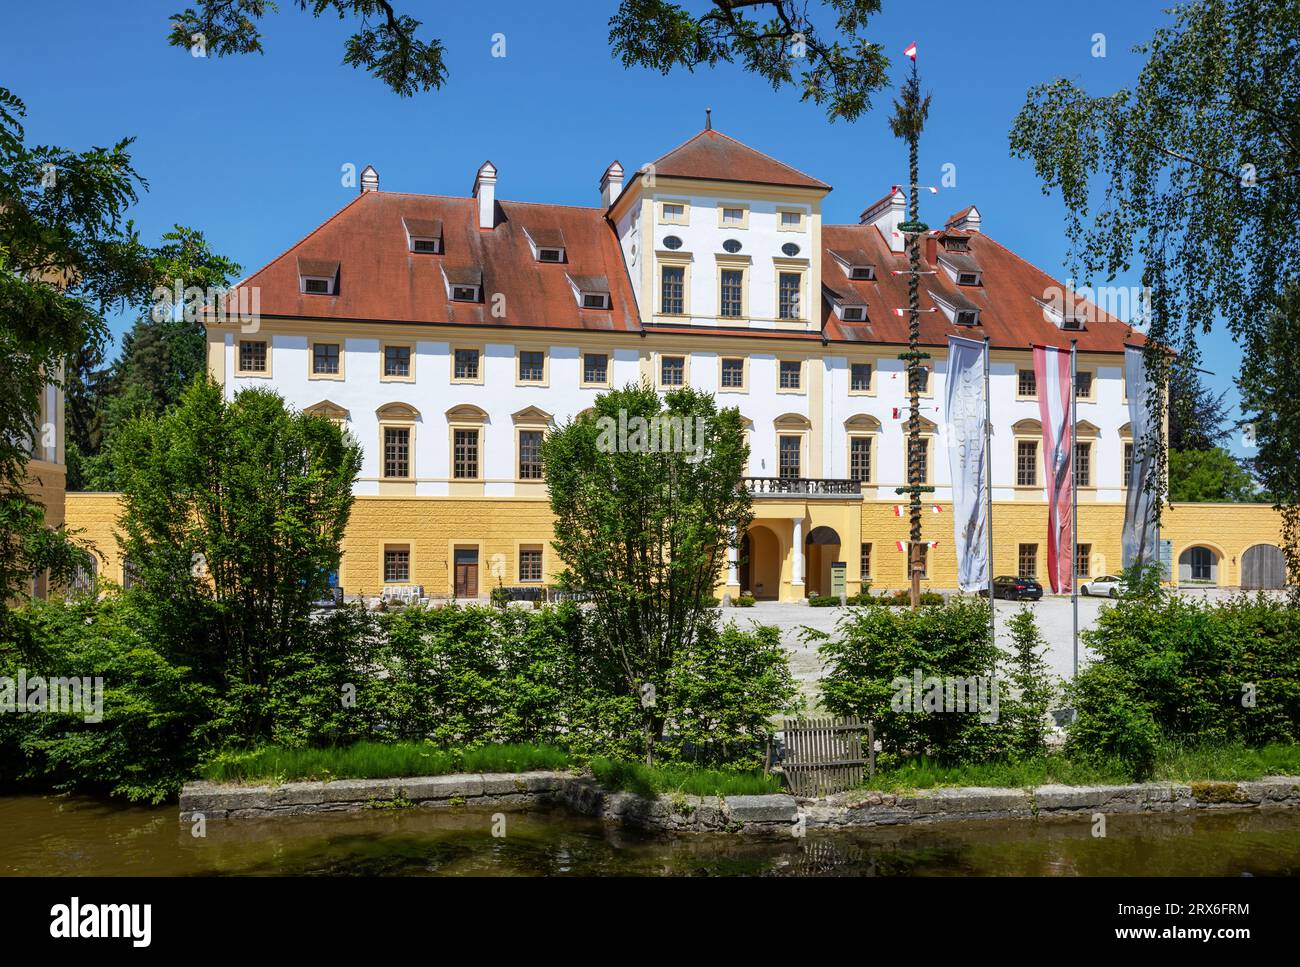 Austria, Upper Austria, Aurolzmunster, Facade of Castle Aurolzmunster Stock Photo